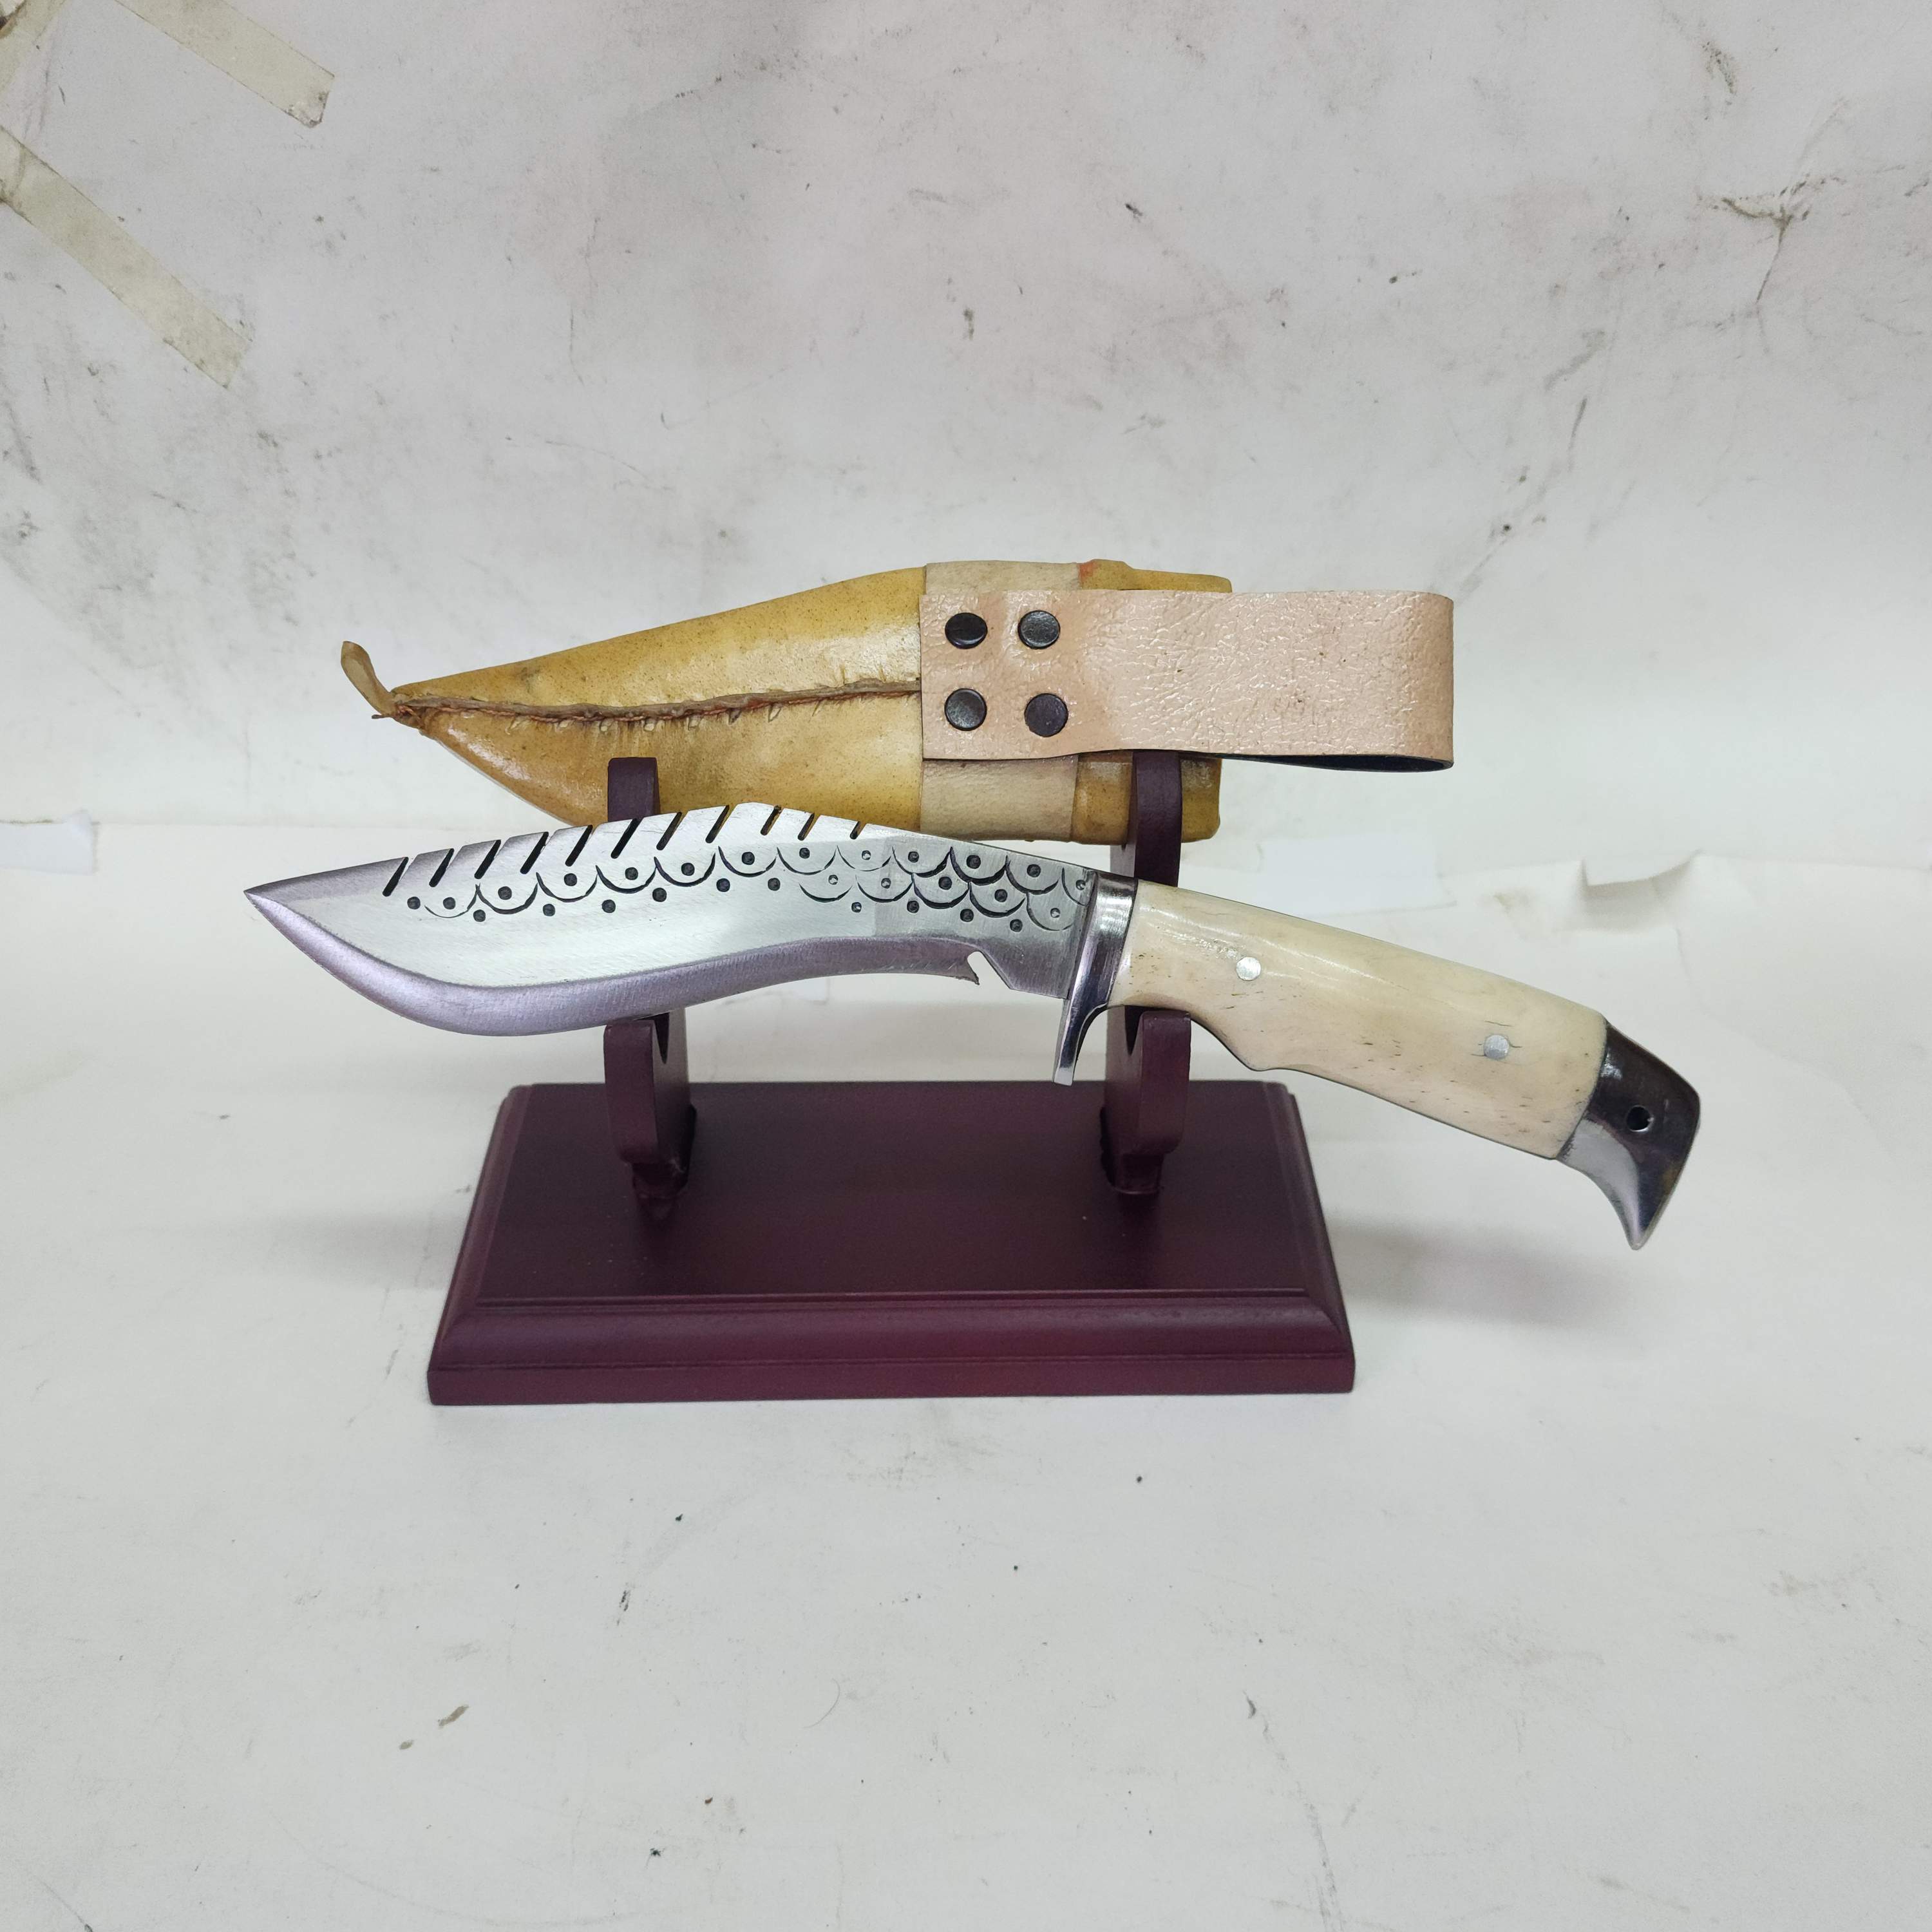 5 Inch, khukuri, Gurkha Knife - eagle Dragon Design With Bone Handle, Nepali Machete With Leather Cover And Stand